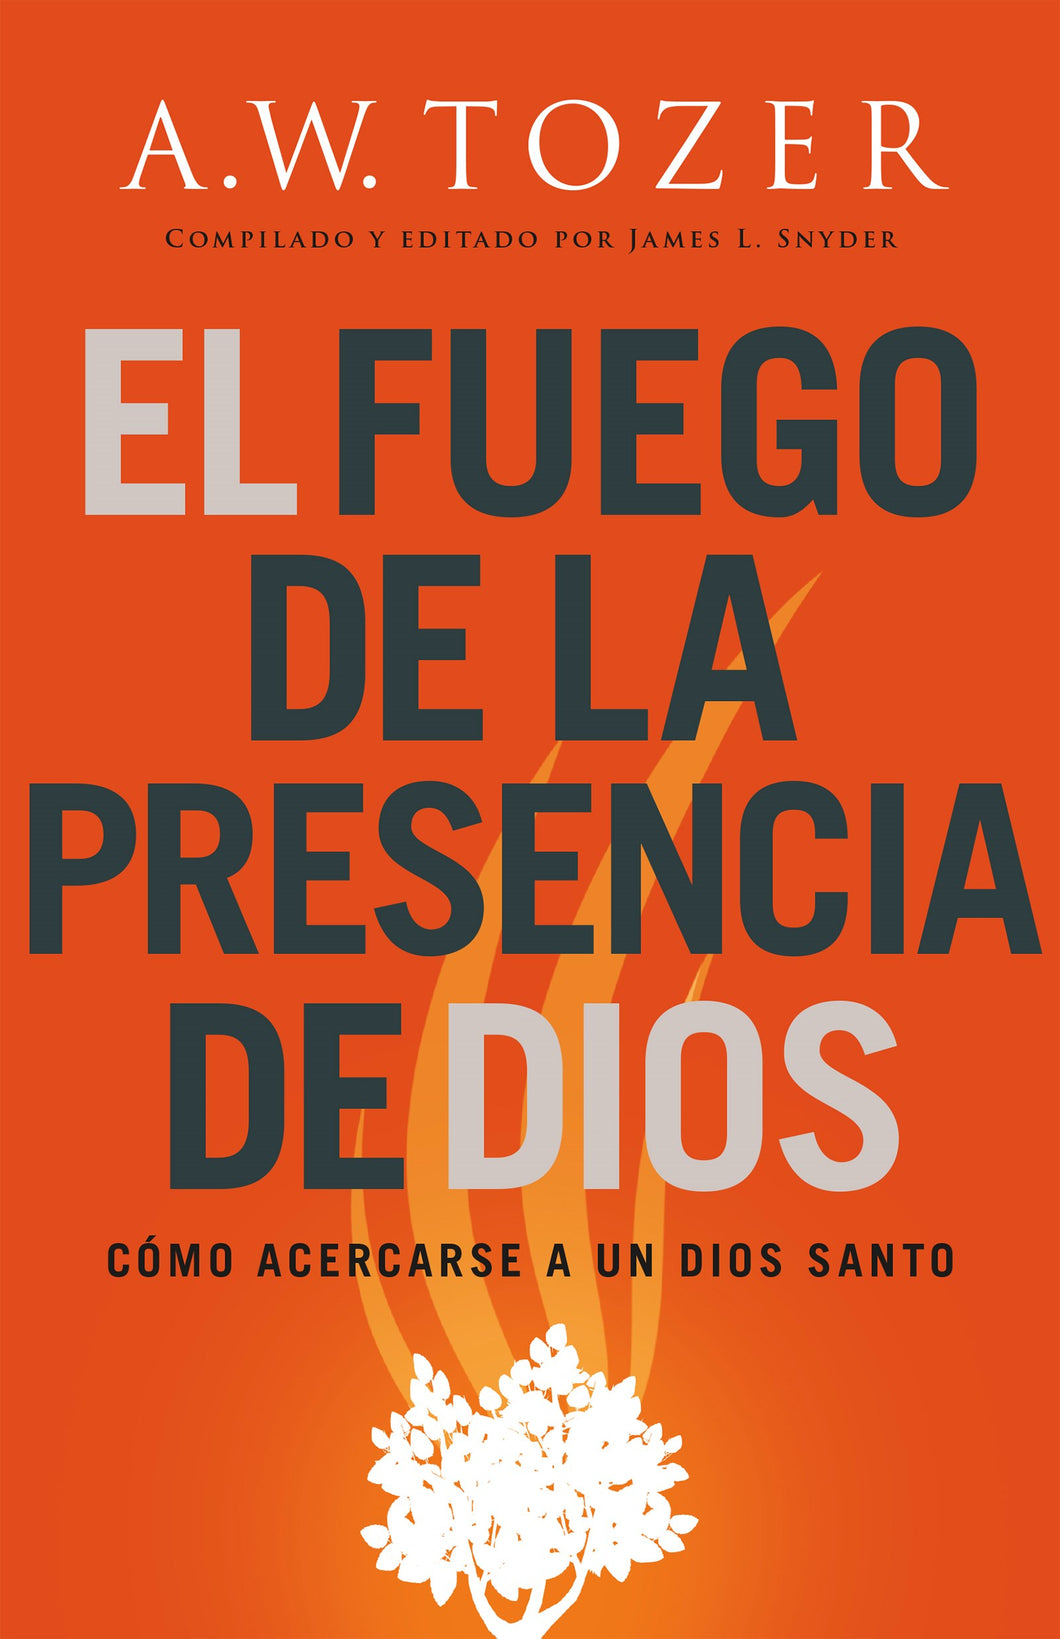 Spanish-Fire Of Gods Presence